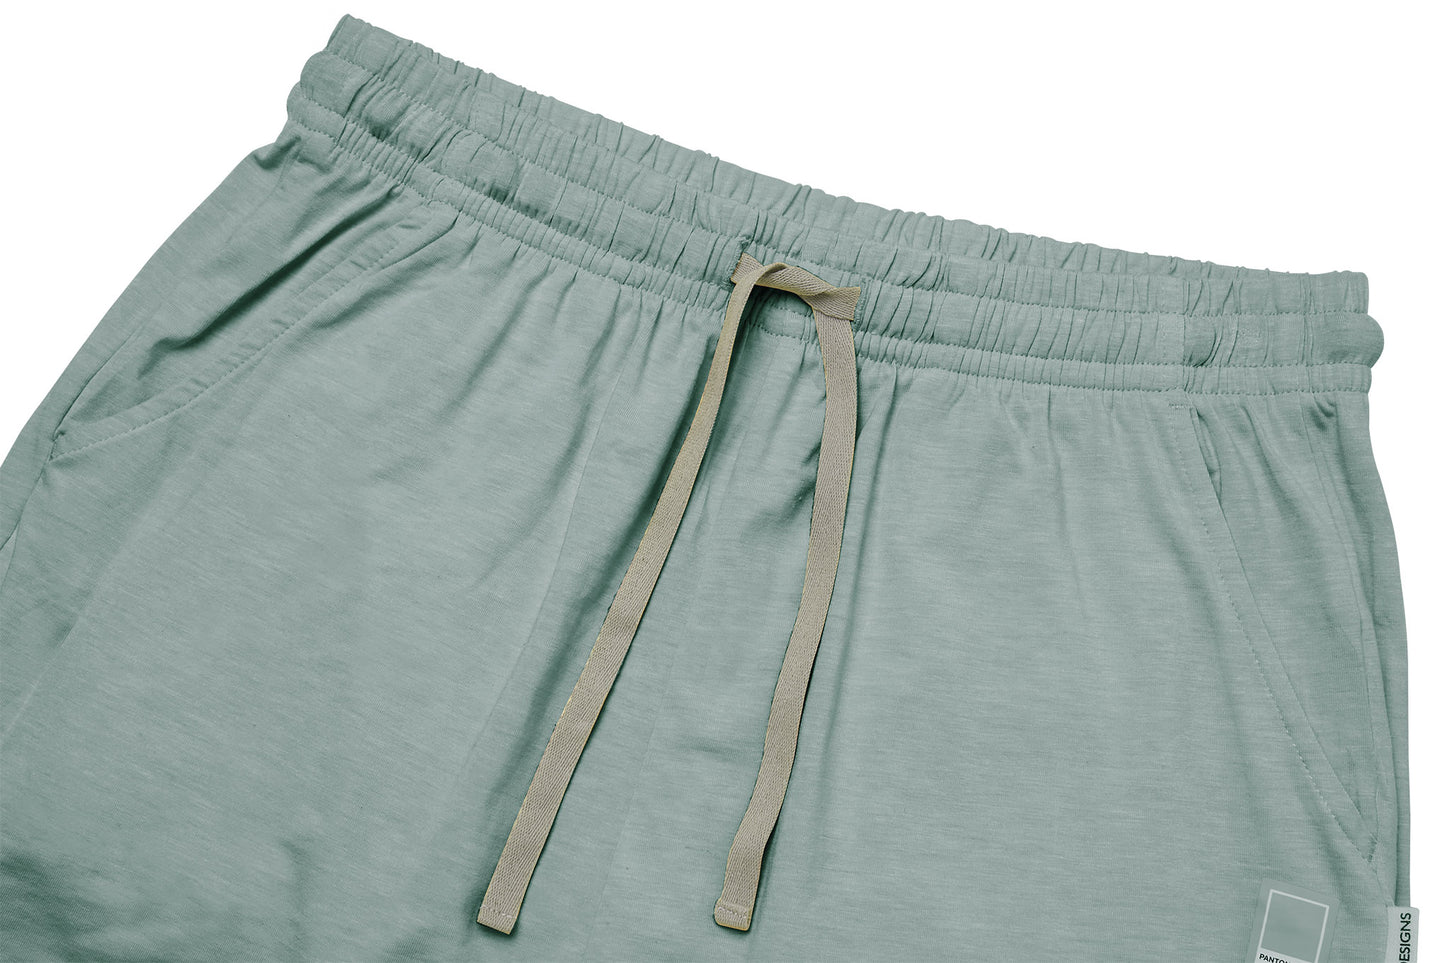 Women's Shorts (Bamboo Jersey) - Pantone Chinois Green